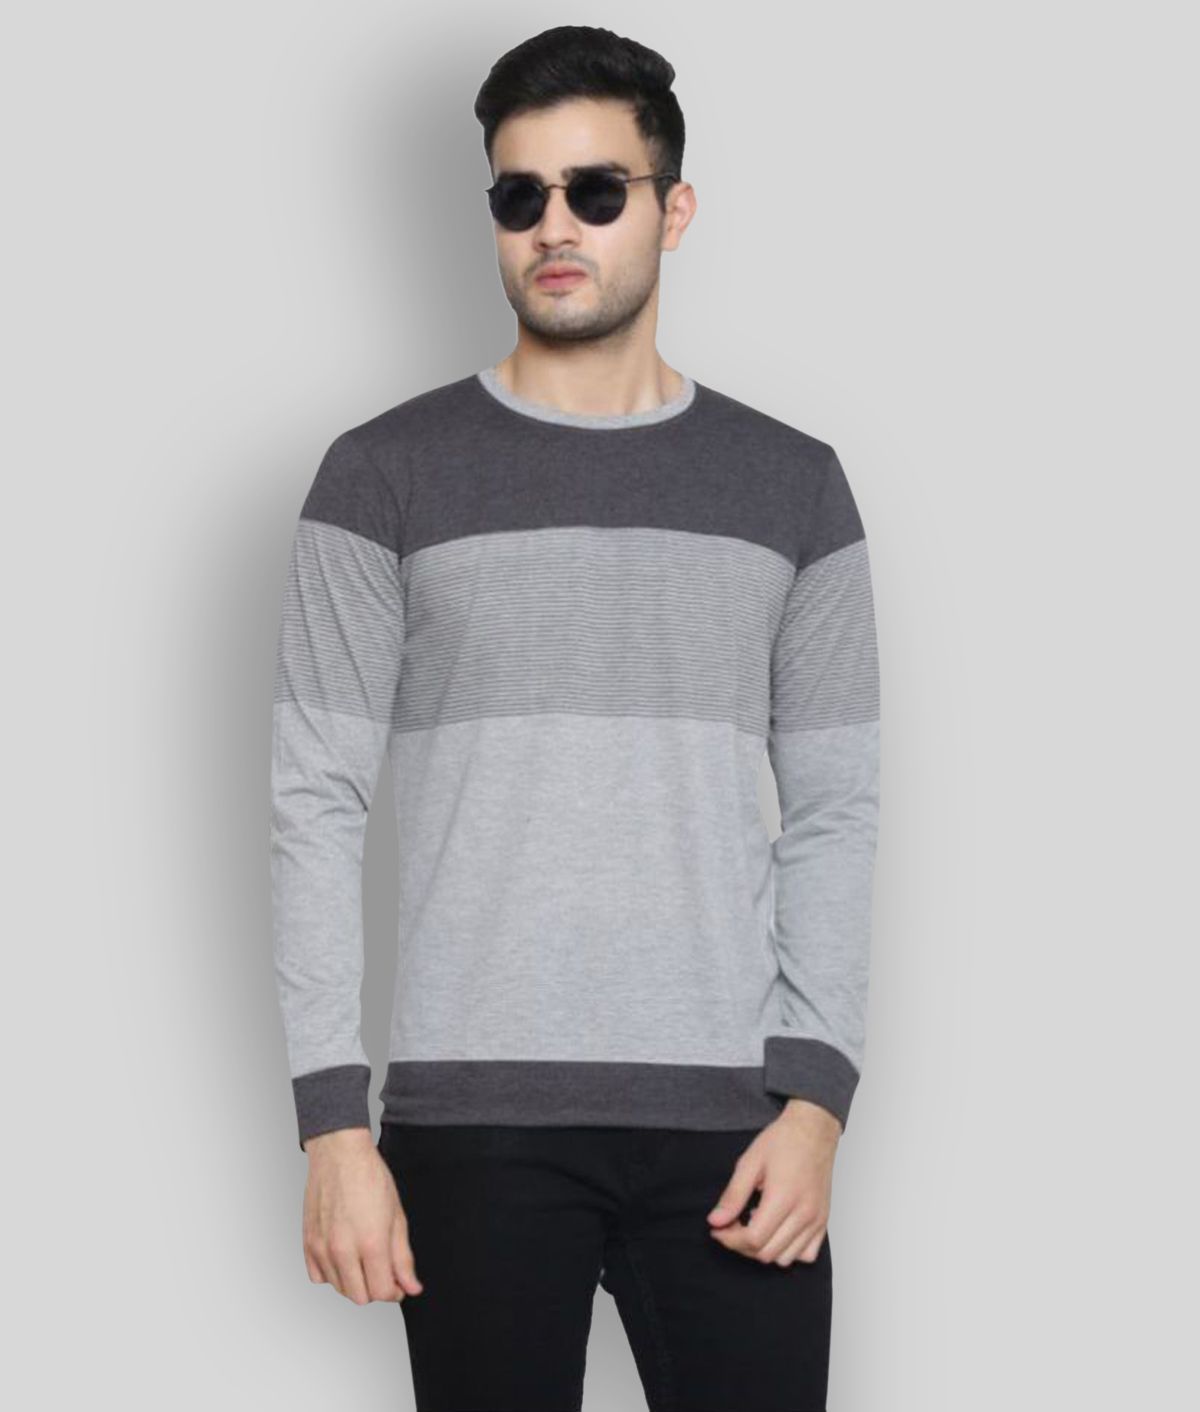     			GENTINO - Grey Cotton Blend Regular Fit Men's T-Shirt ( Pack of 1 )